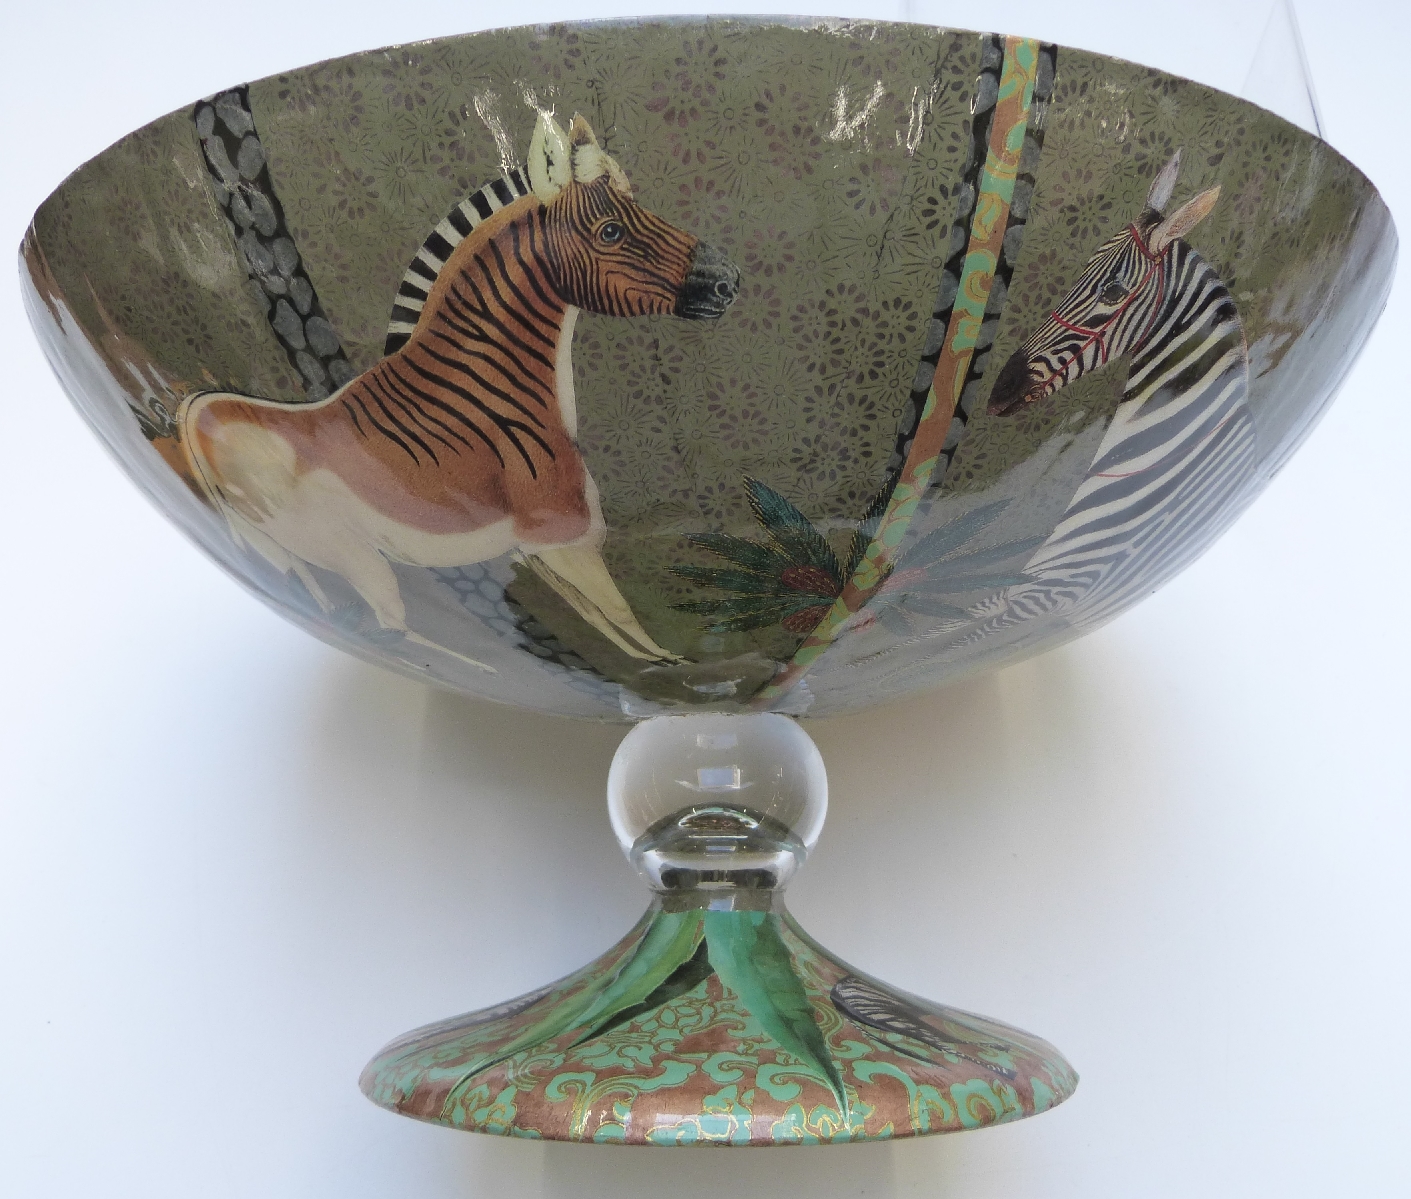 Glass pedestal fruit bowl with rhino and zebra decoration, H20cm, diameter 37cm